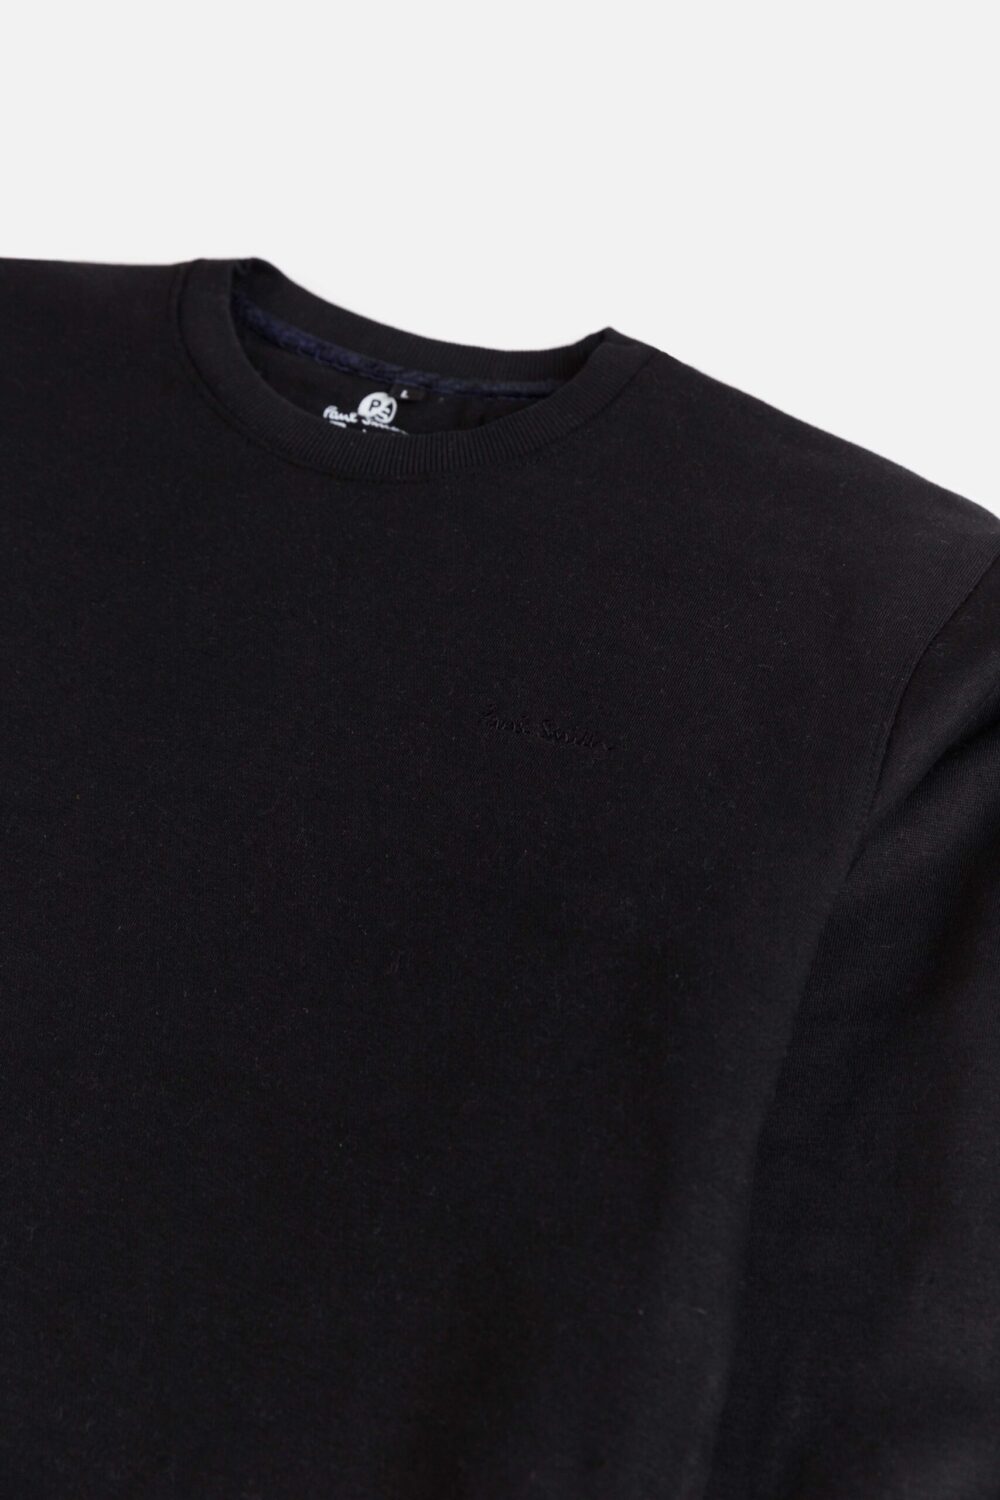 Paul Smith Original Premium Fleece Sweatshirt – Black